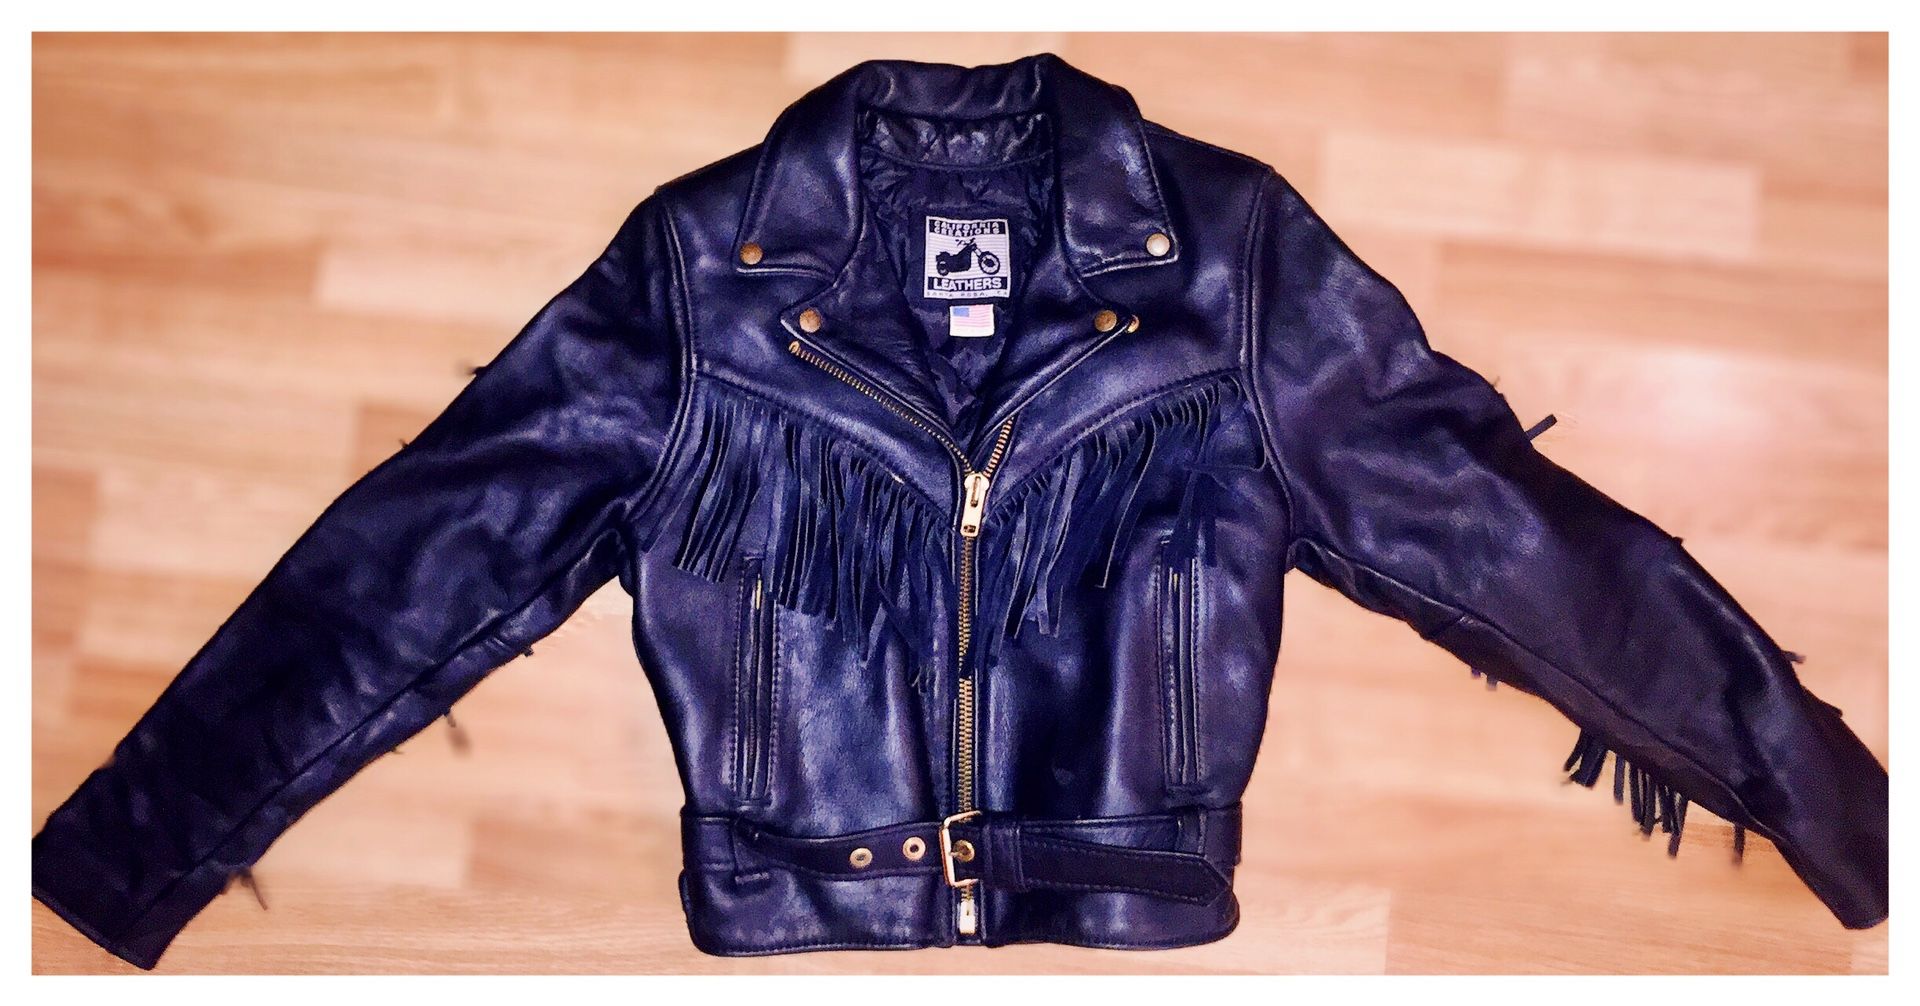 Harley Davidson Leather Motorcycle Jacket, Vests, Pants